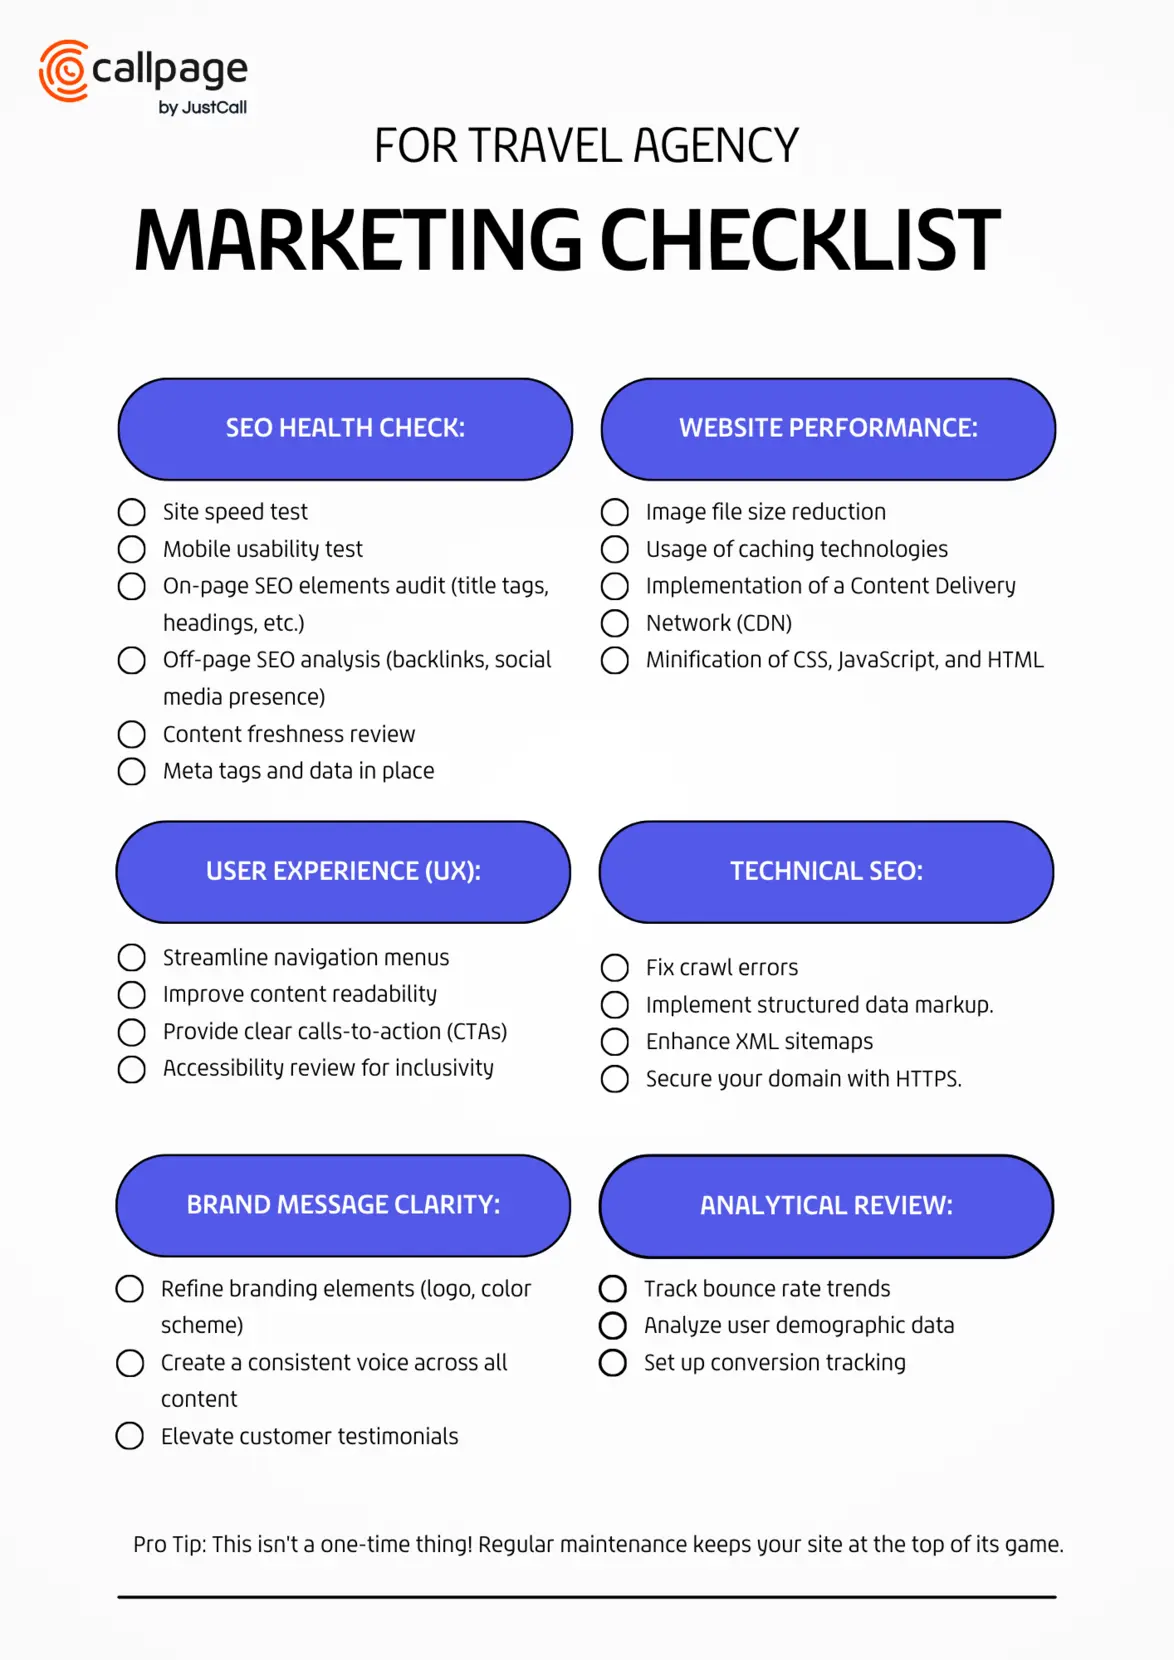 checklist of marketing activities for travel agencies 